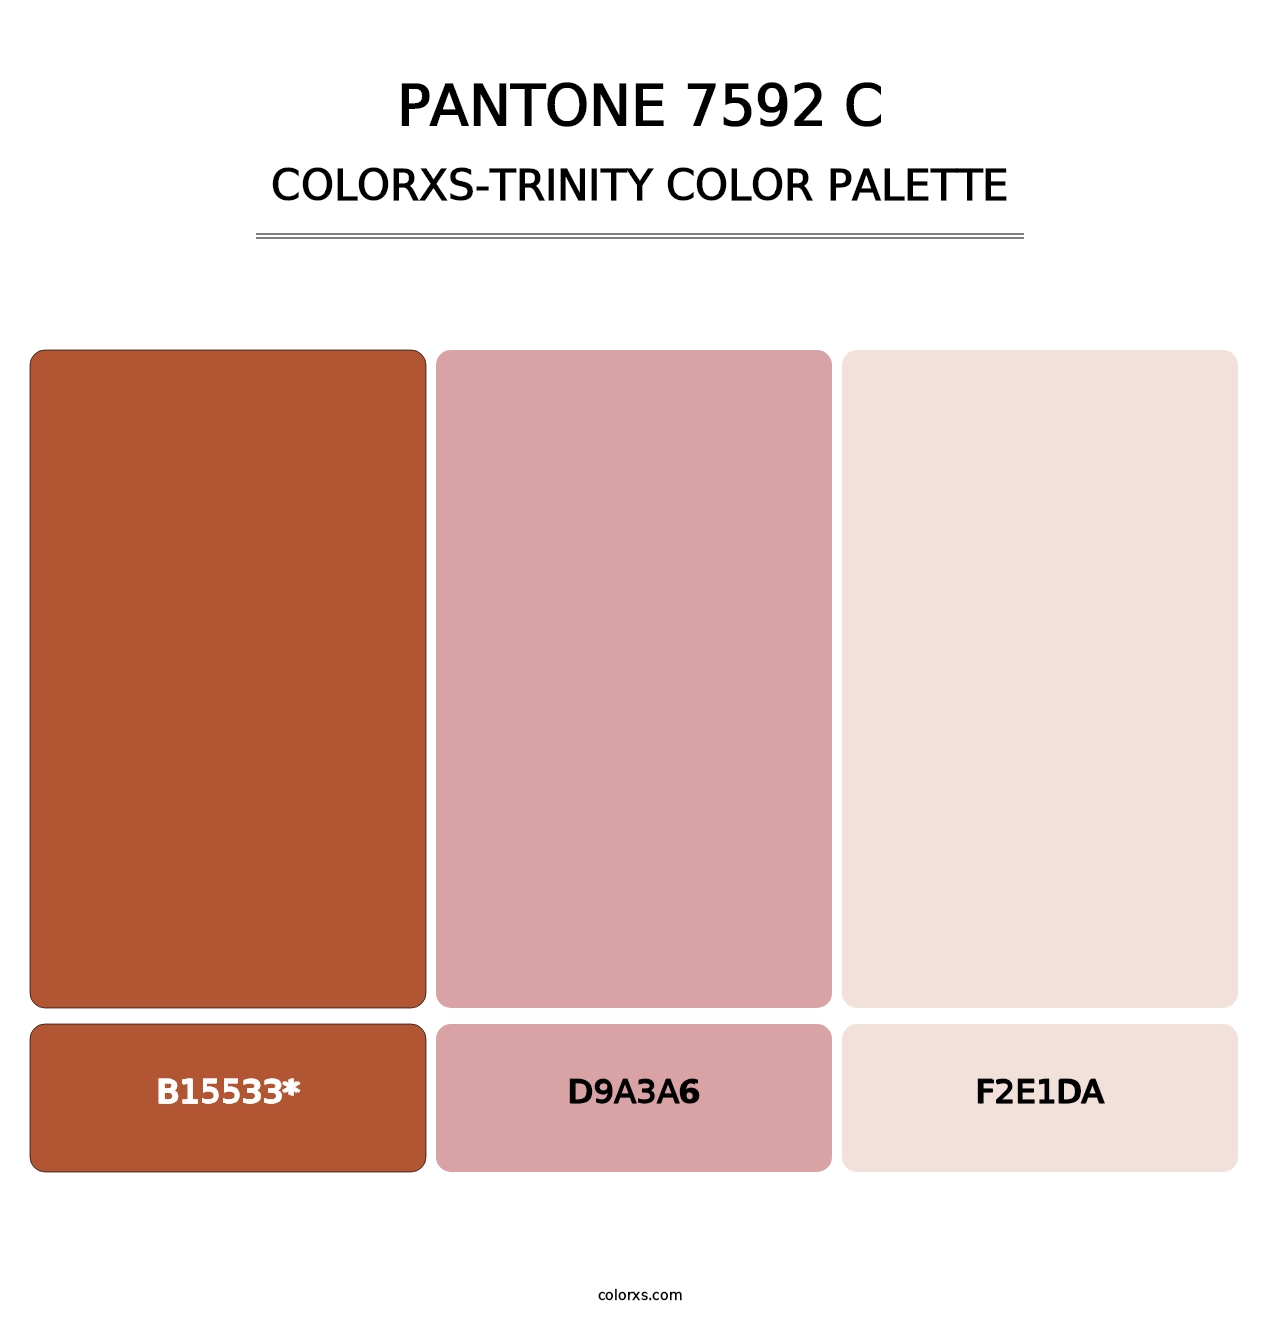 PANTONE 7592 C - Colorxs Trinity Palette